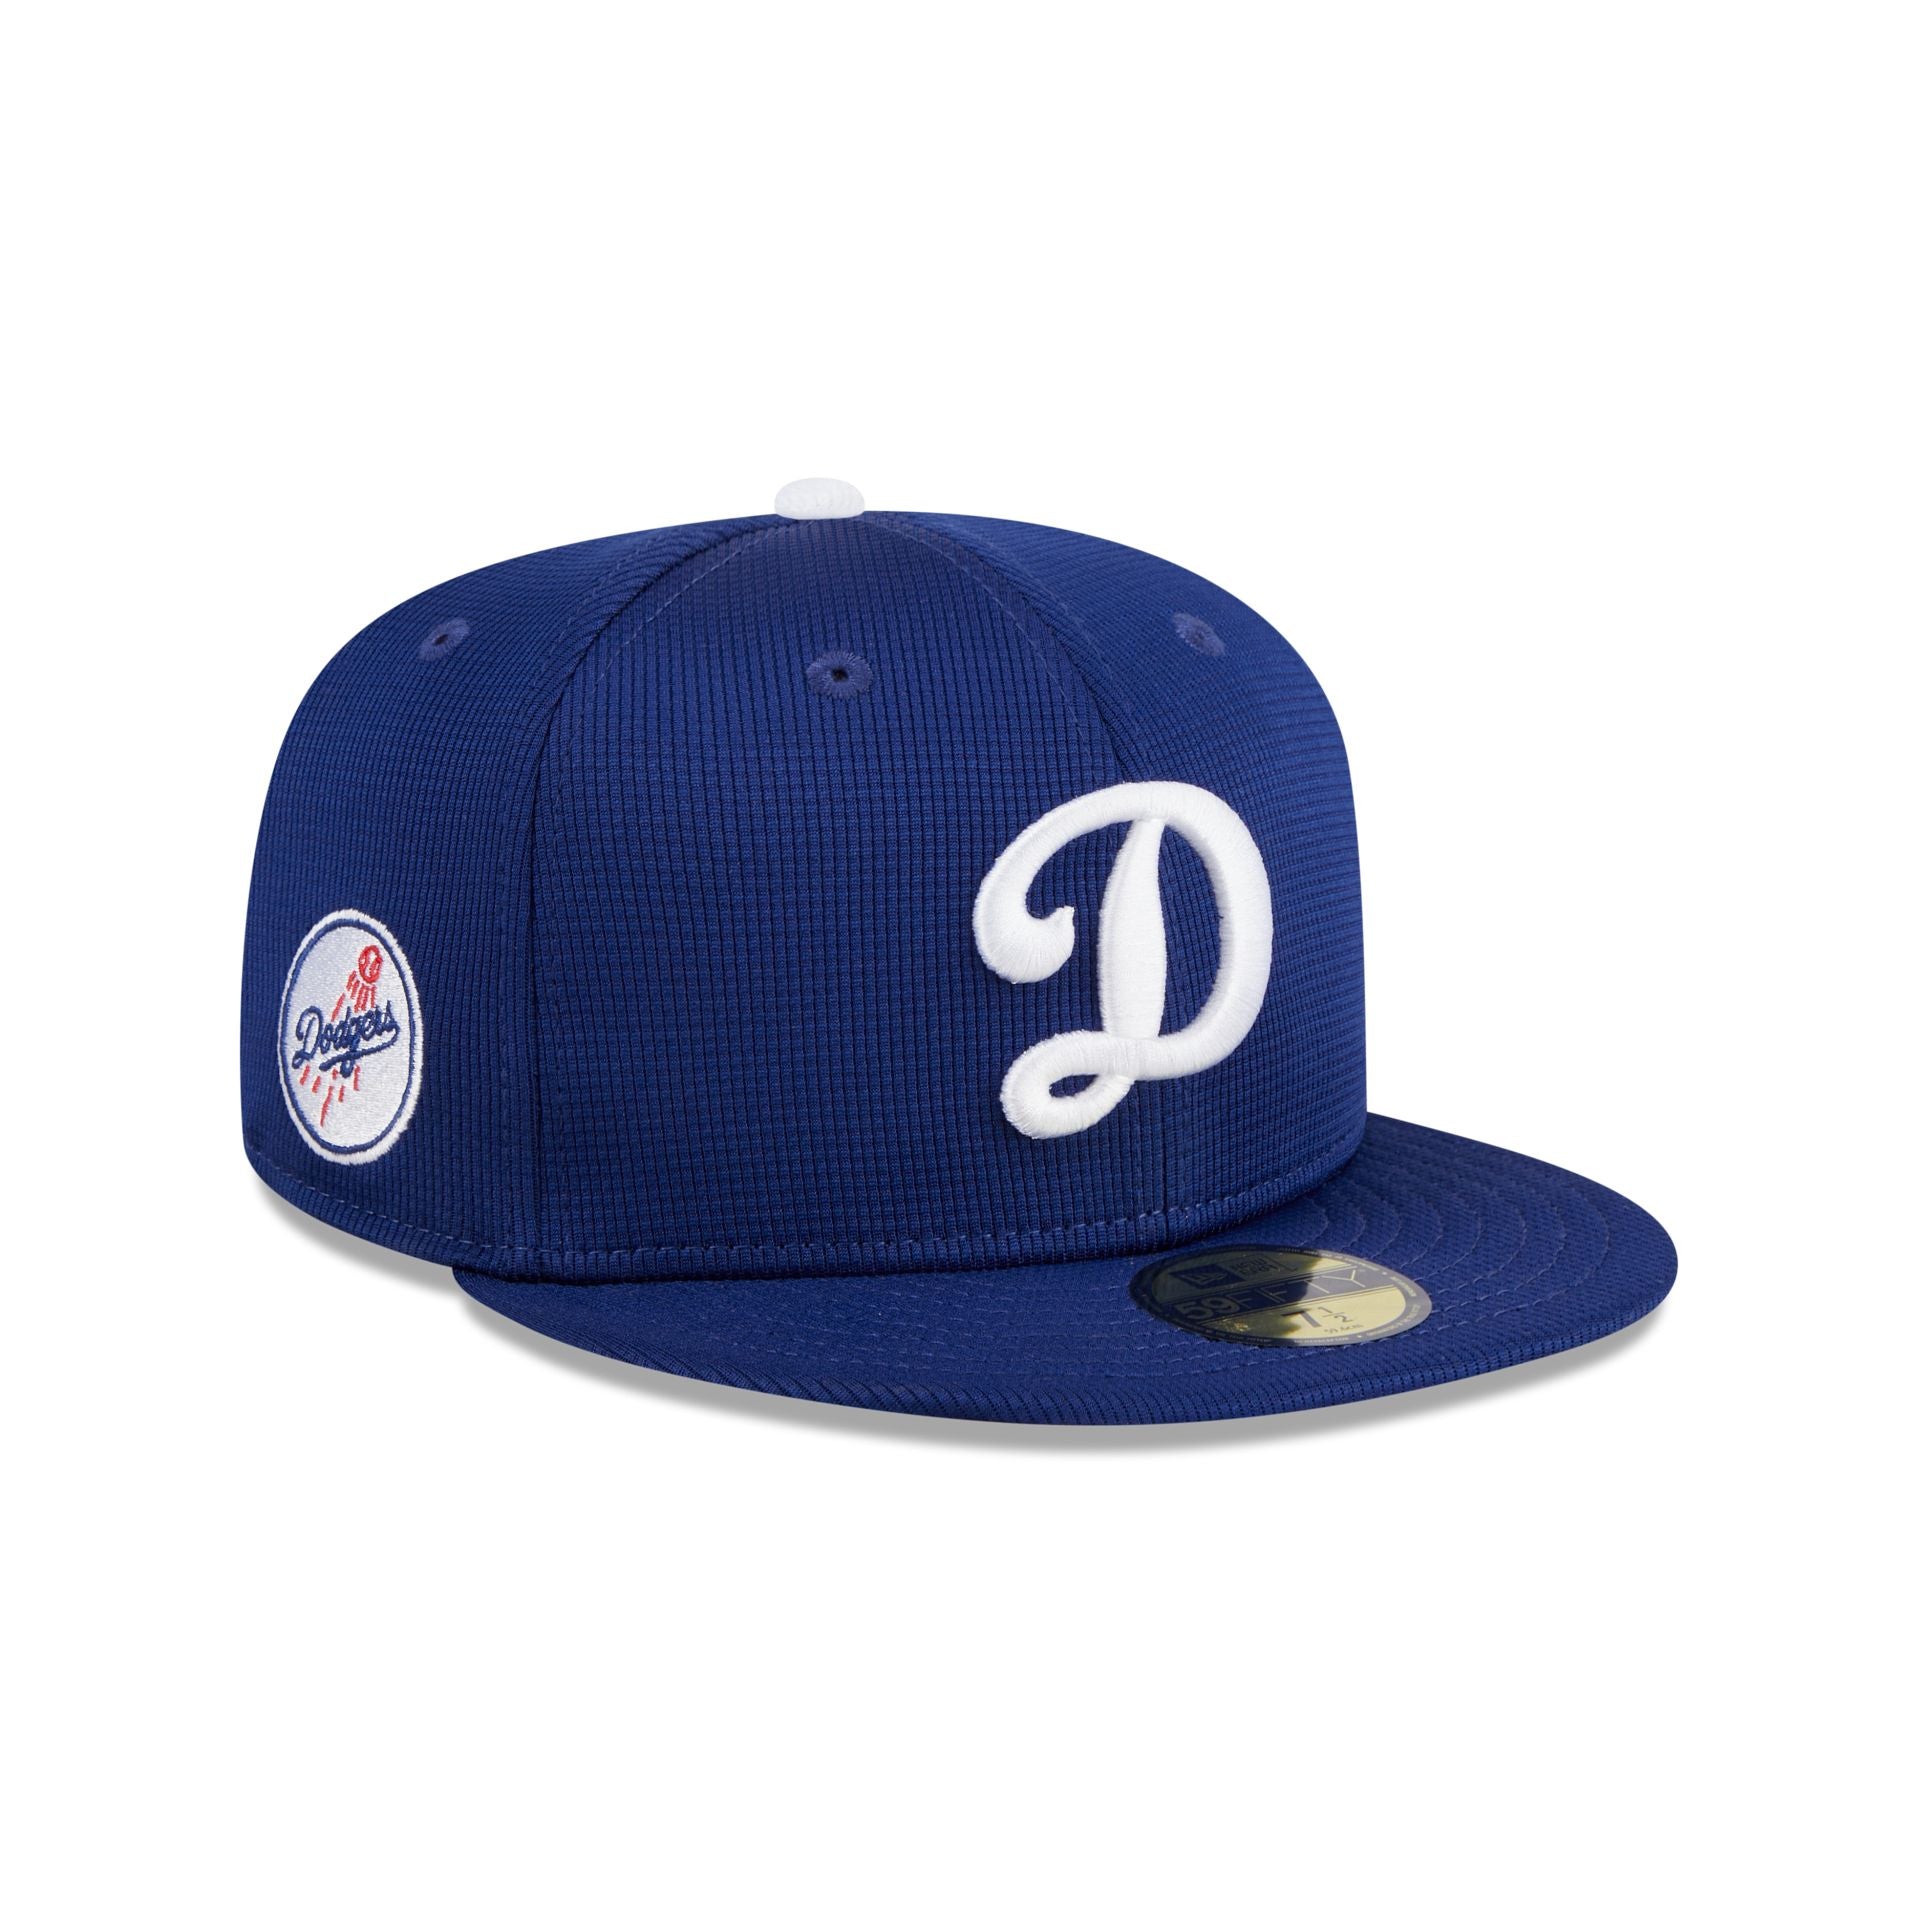 Los Angeles Rebel Baseball Cap (Black)